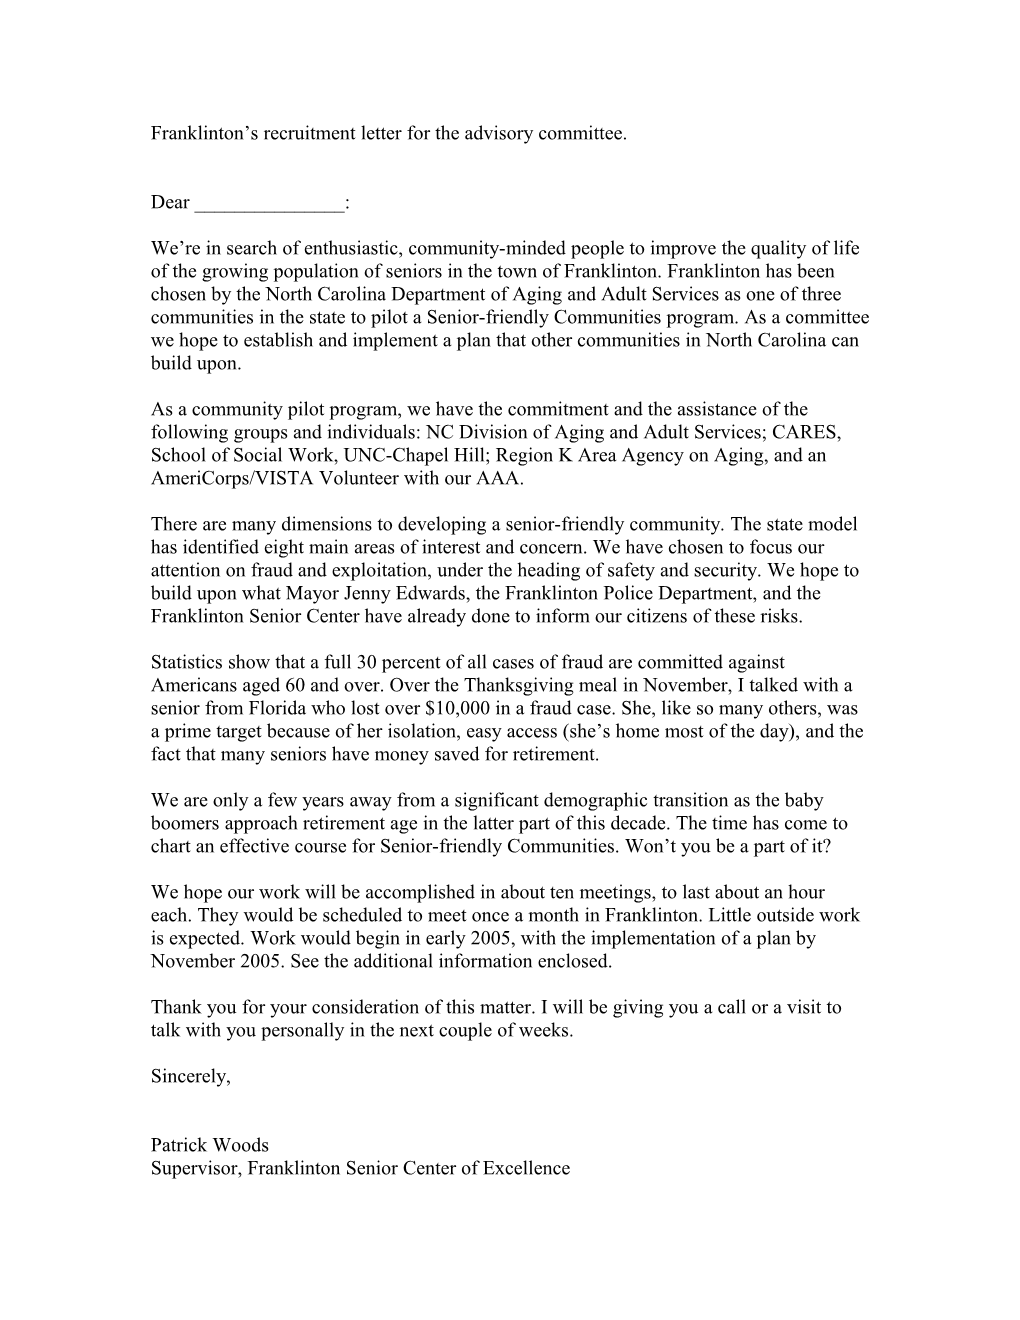 Franklinton S Recruitment Letter for the Advisory Committee